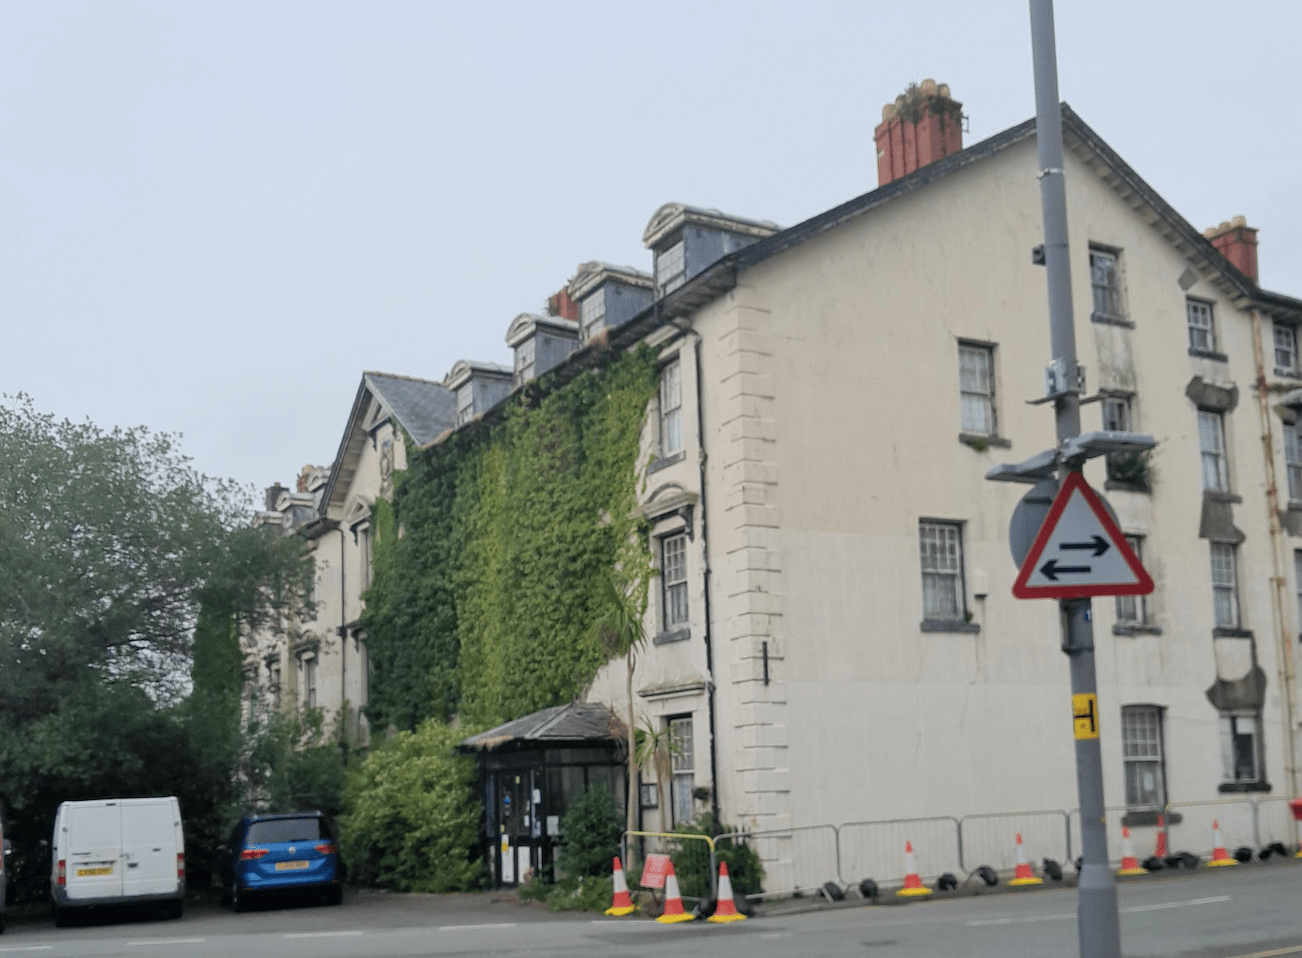 Former Gwynedd hotel once visited by John and Yoko still a concern for residents